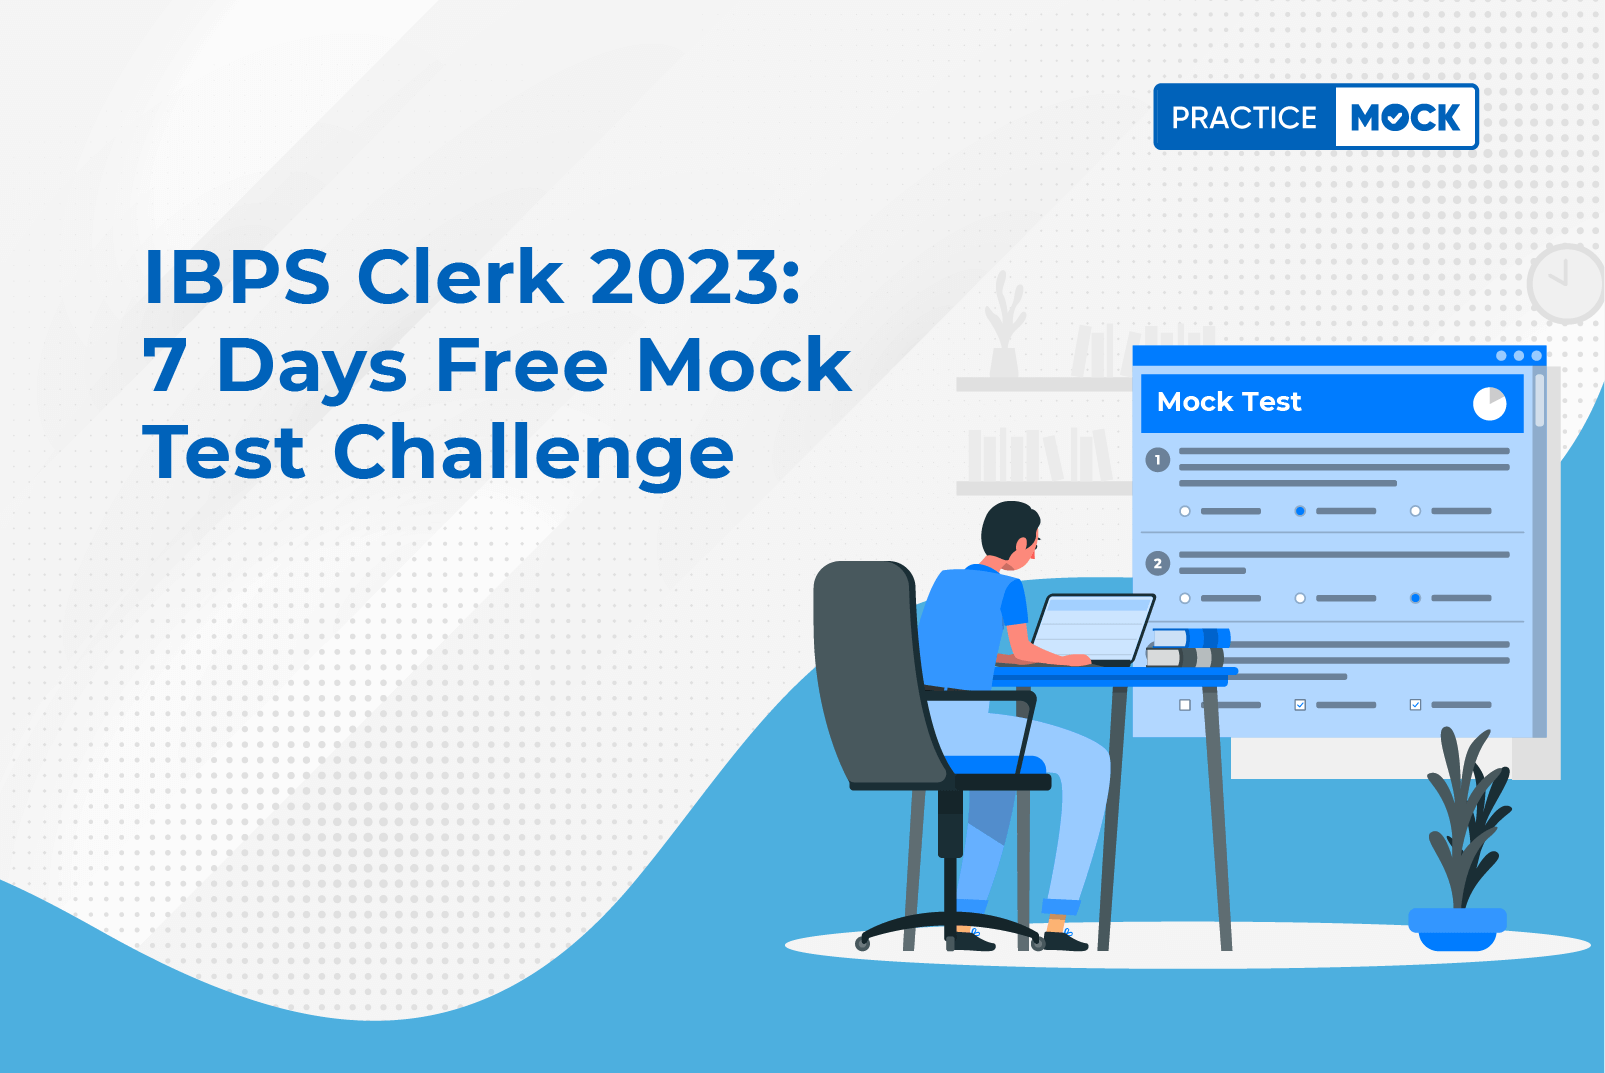 IBPS Clerk 2023 7 Days Free Mock Test Challenge